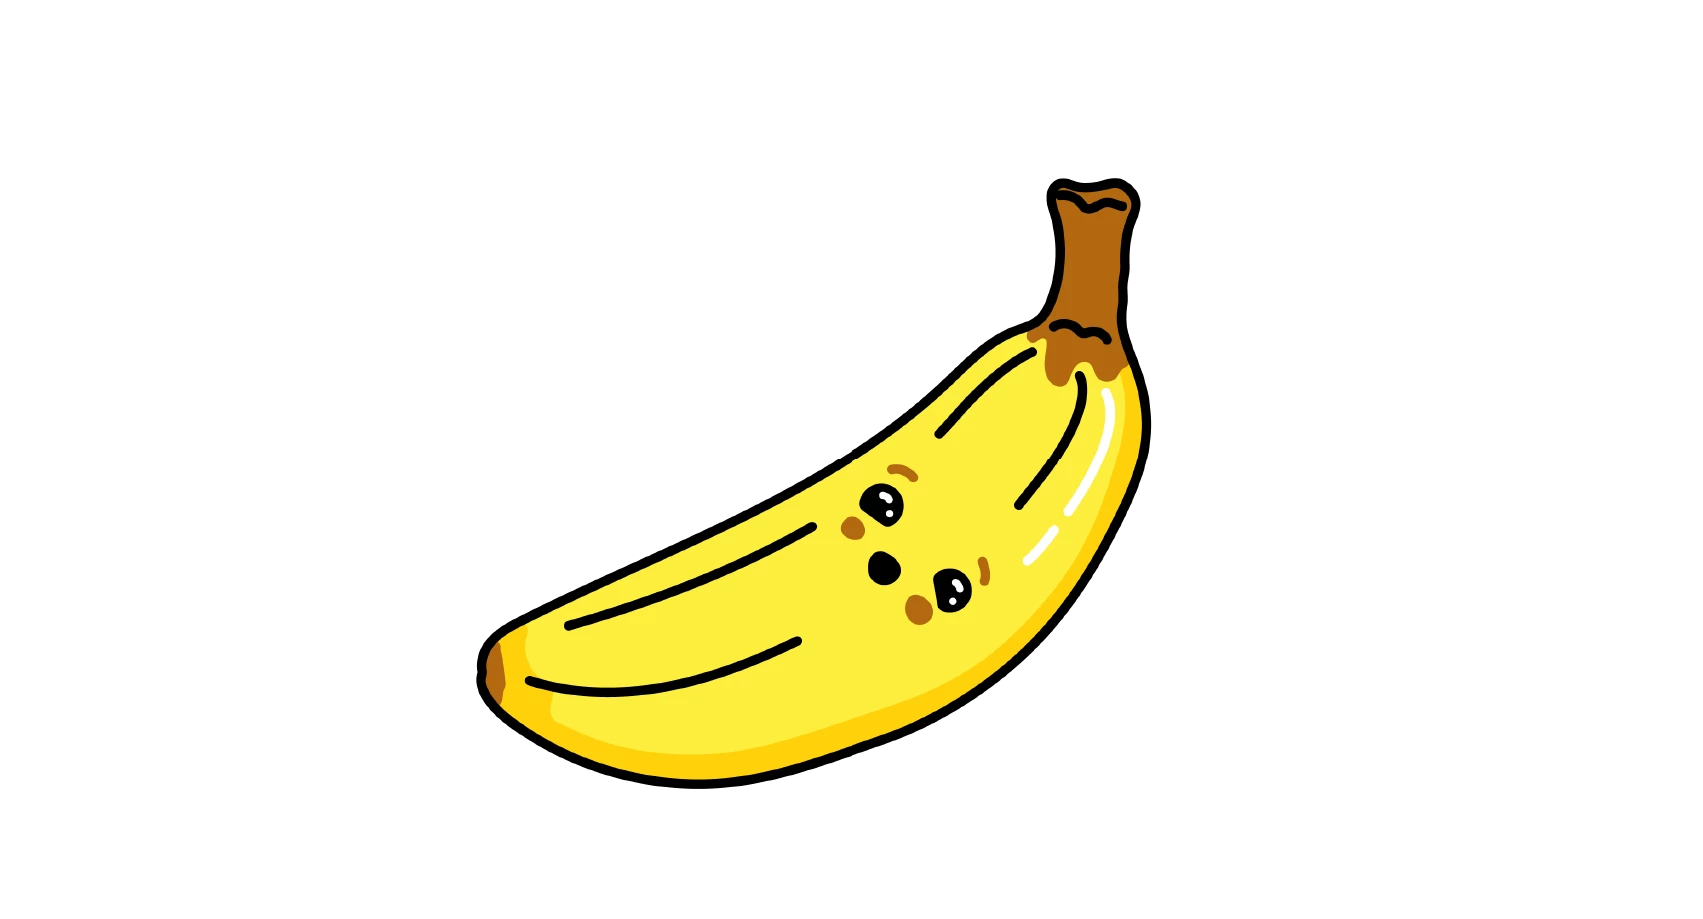 Baby size: Banana